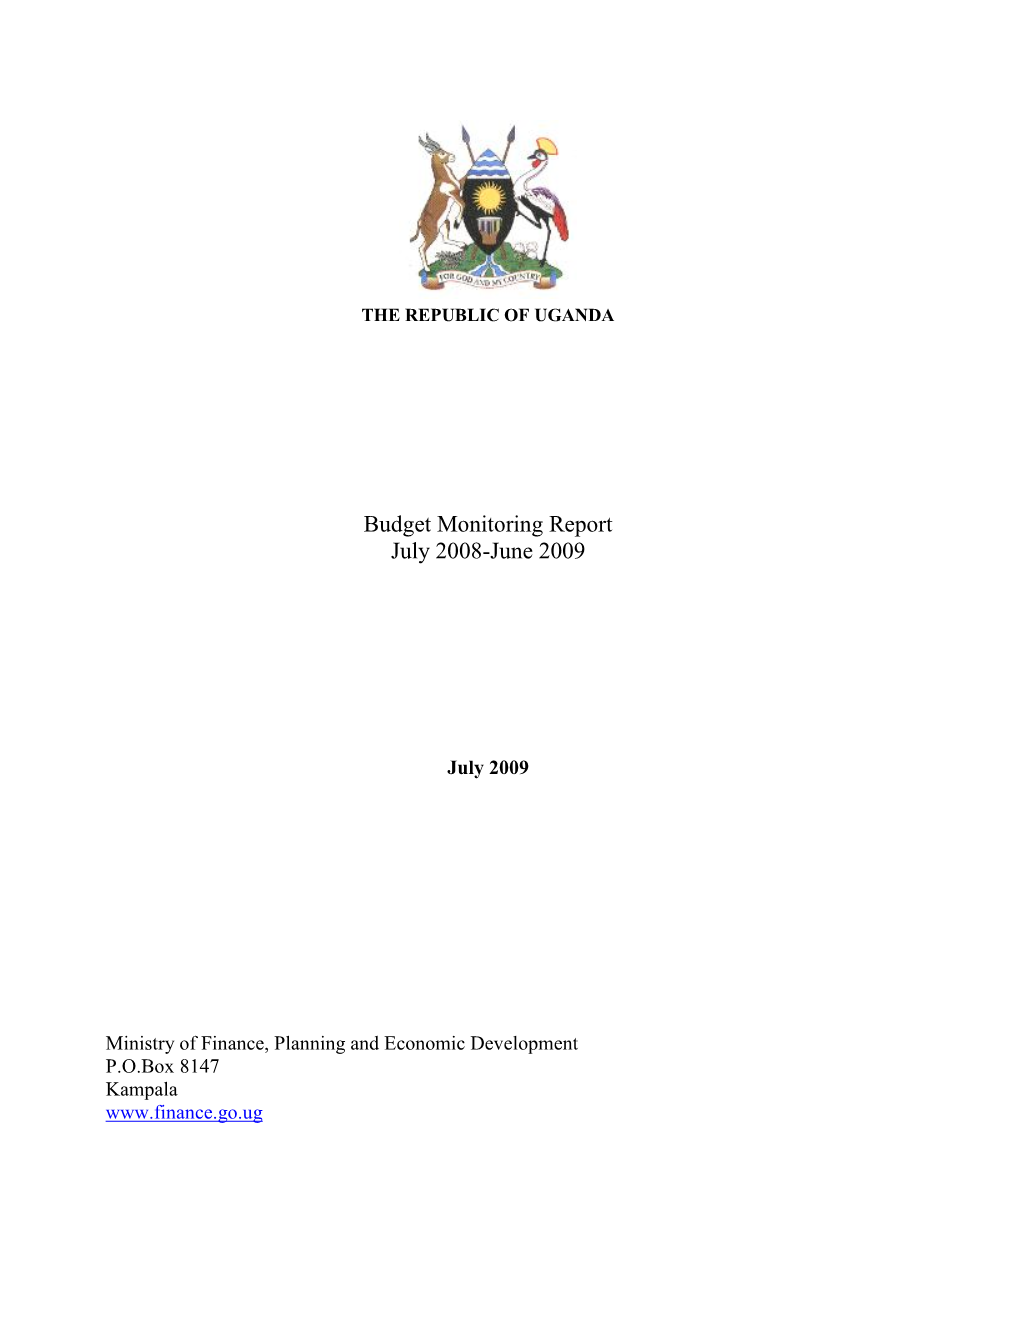 Budget Monitoring Report July 2008-June 2009